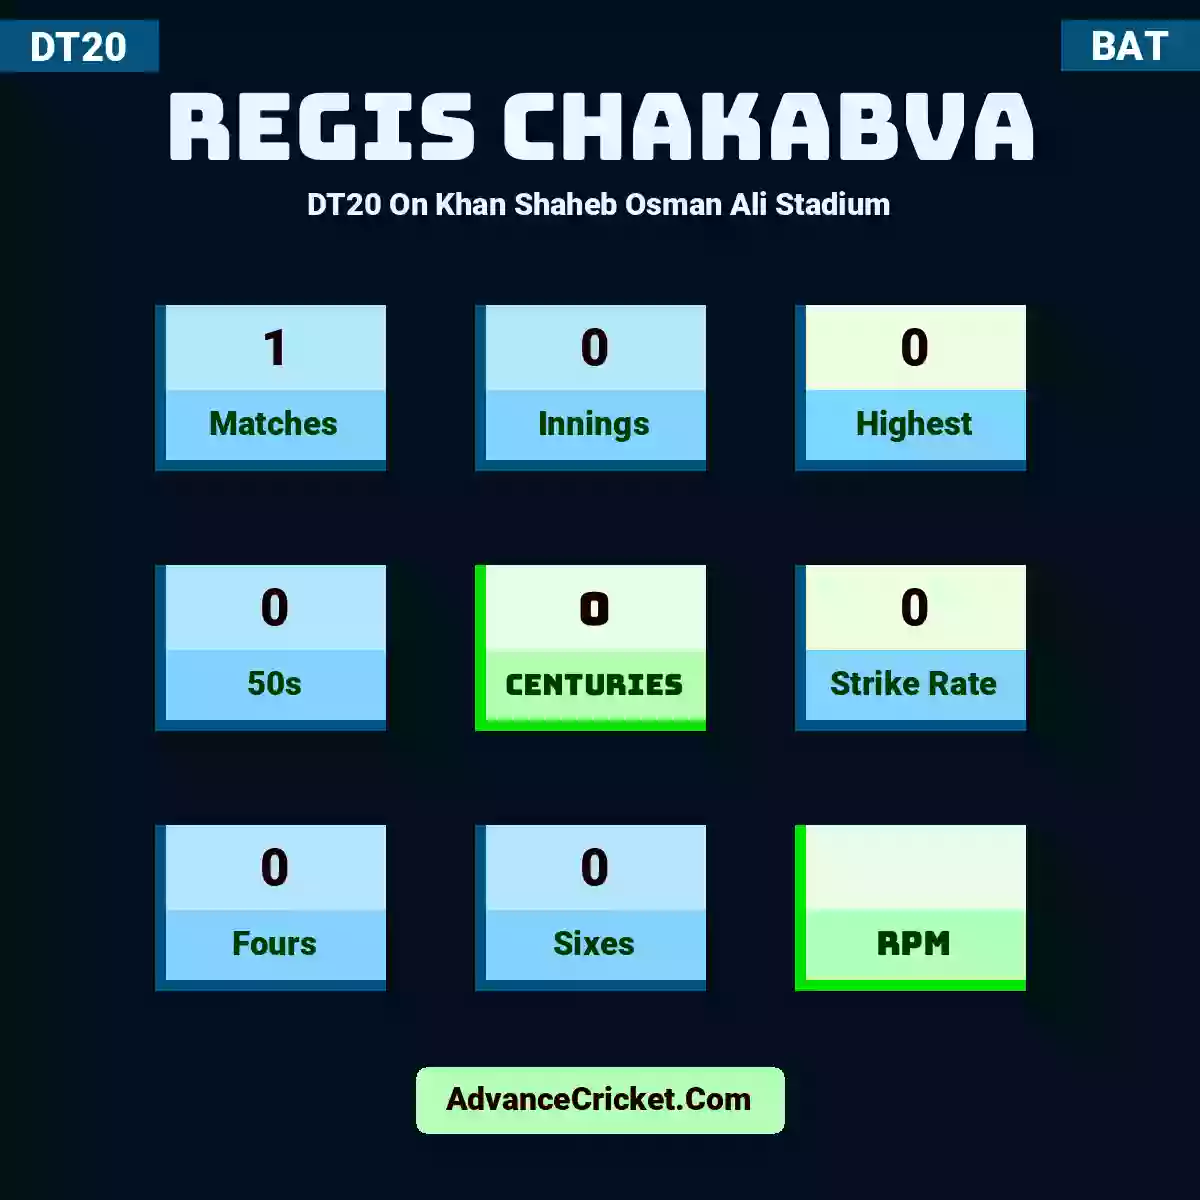 Regis Chakabva DT20  On Khan Shaheb Osman Ali Stadium, Regis Chakabva played 1 matches, scored 0 runs as highest, 0 half-centuries, and 0 centuries, with a strike rate of 0. R.Chakabva hit 0 fours and 0 sixes.